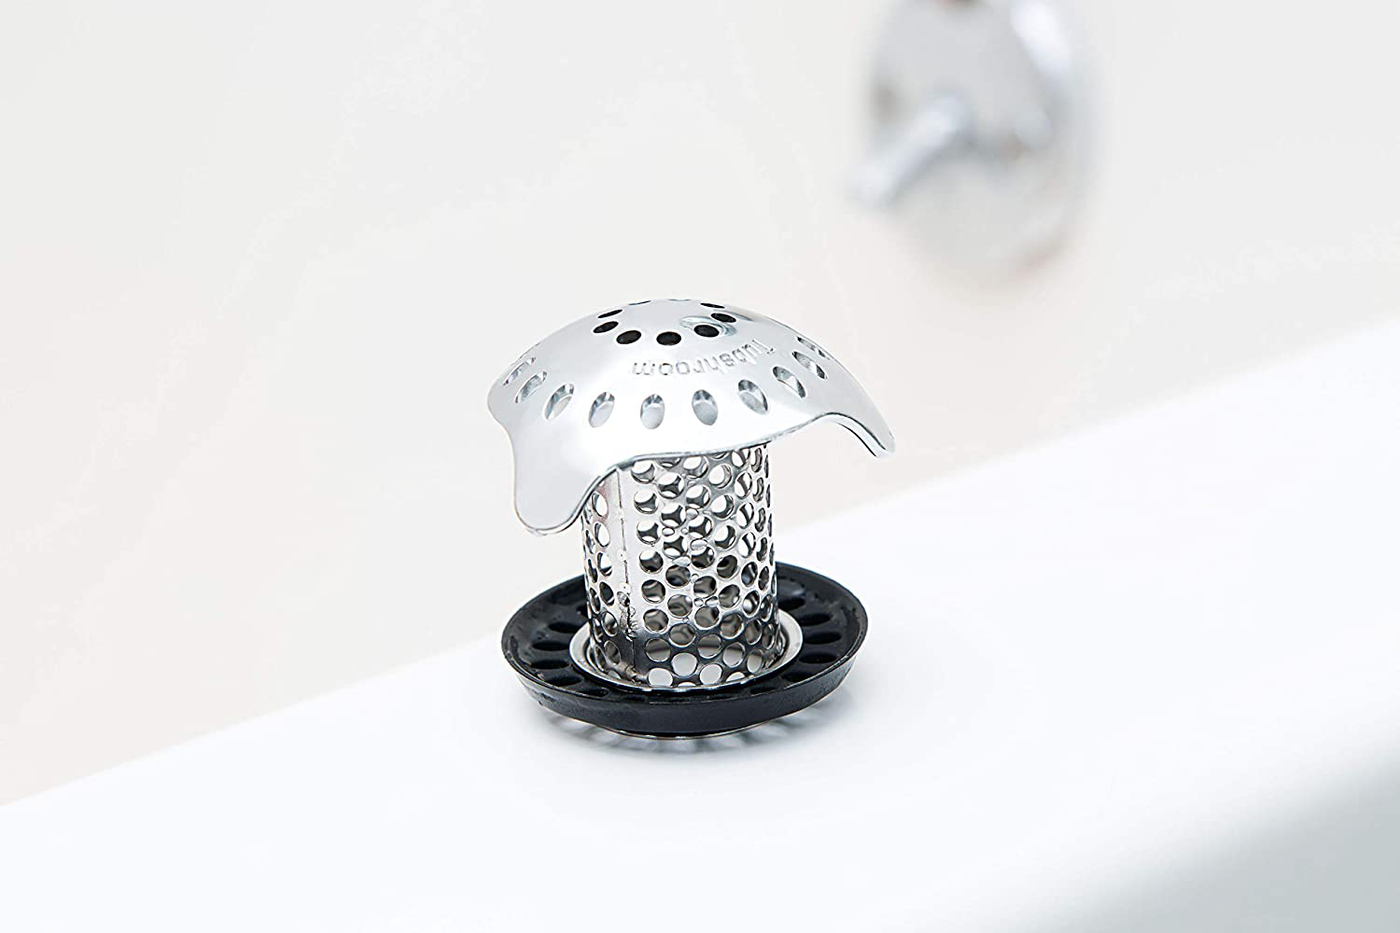 TubShroom Ultra Revolutionary Bath Tub Drain Protector Hair Catcher/Strainer/Snare, Stainless Steel